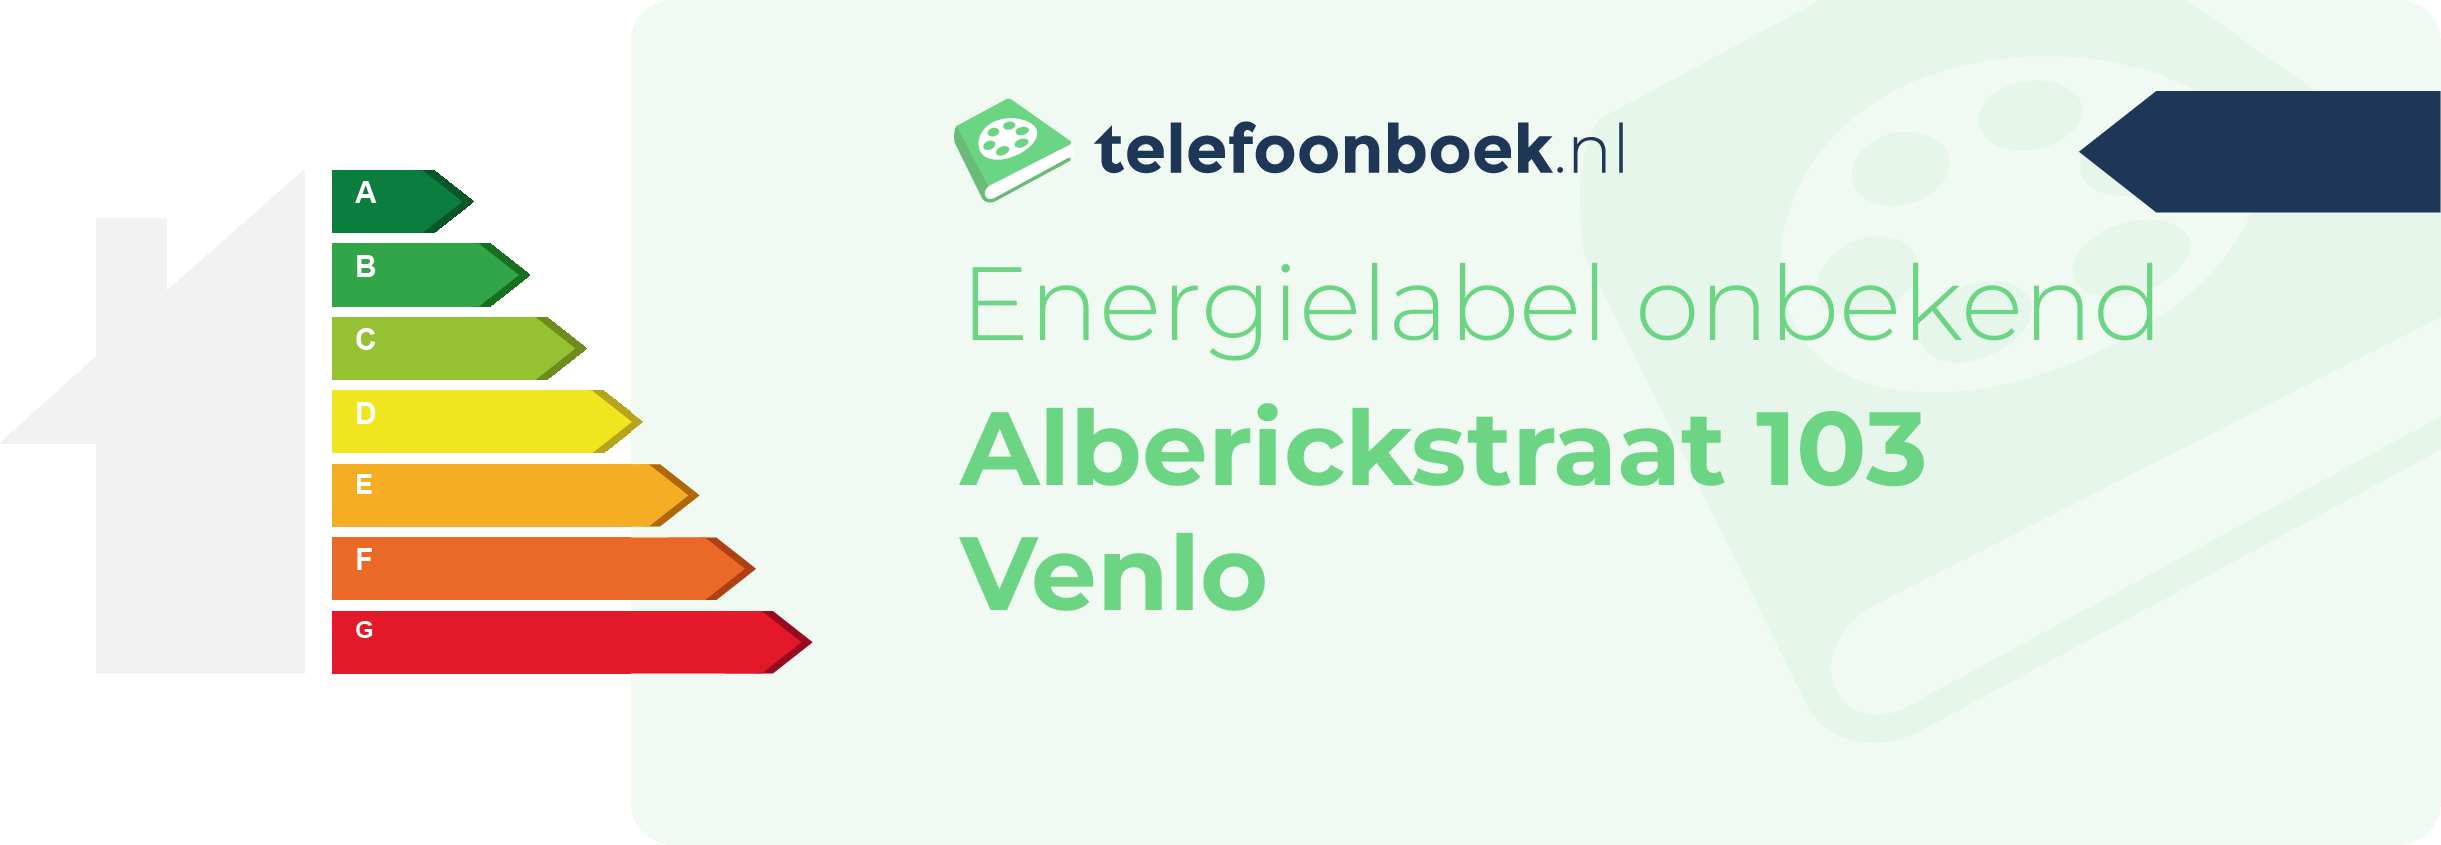 Energielabel Alberickstraat 103 Venlo